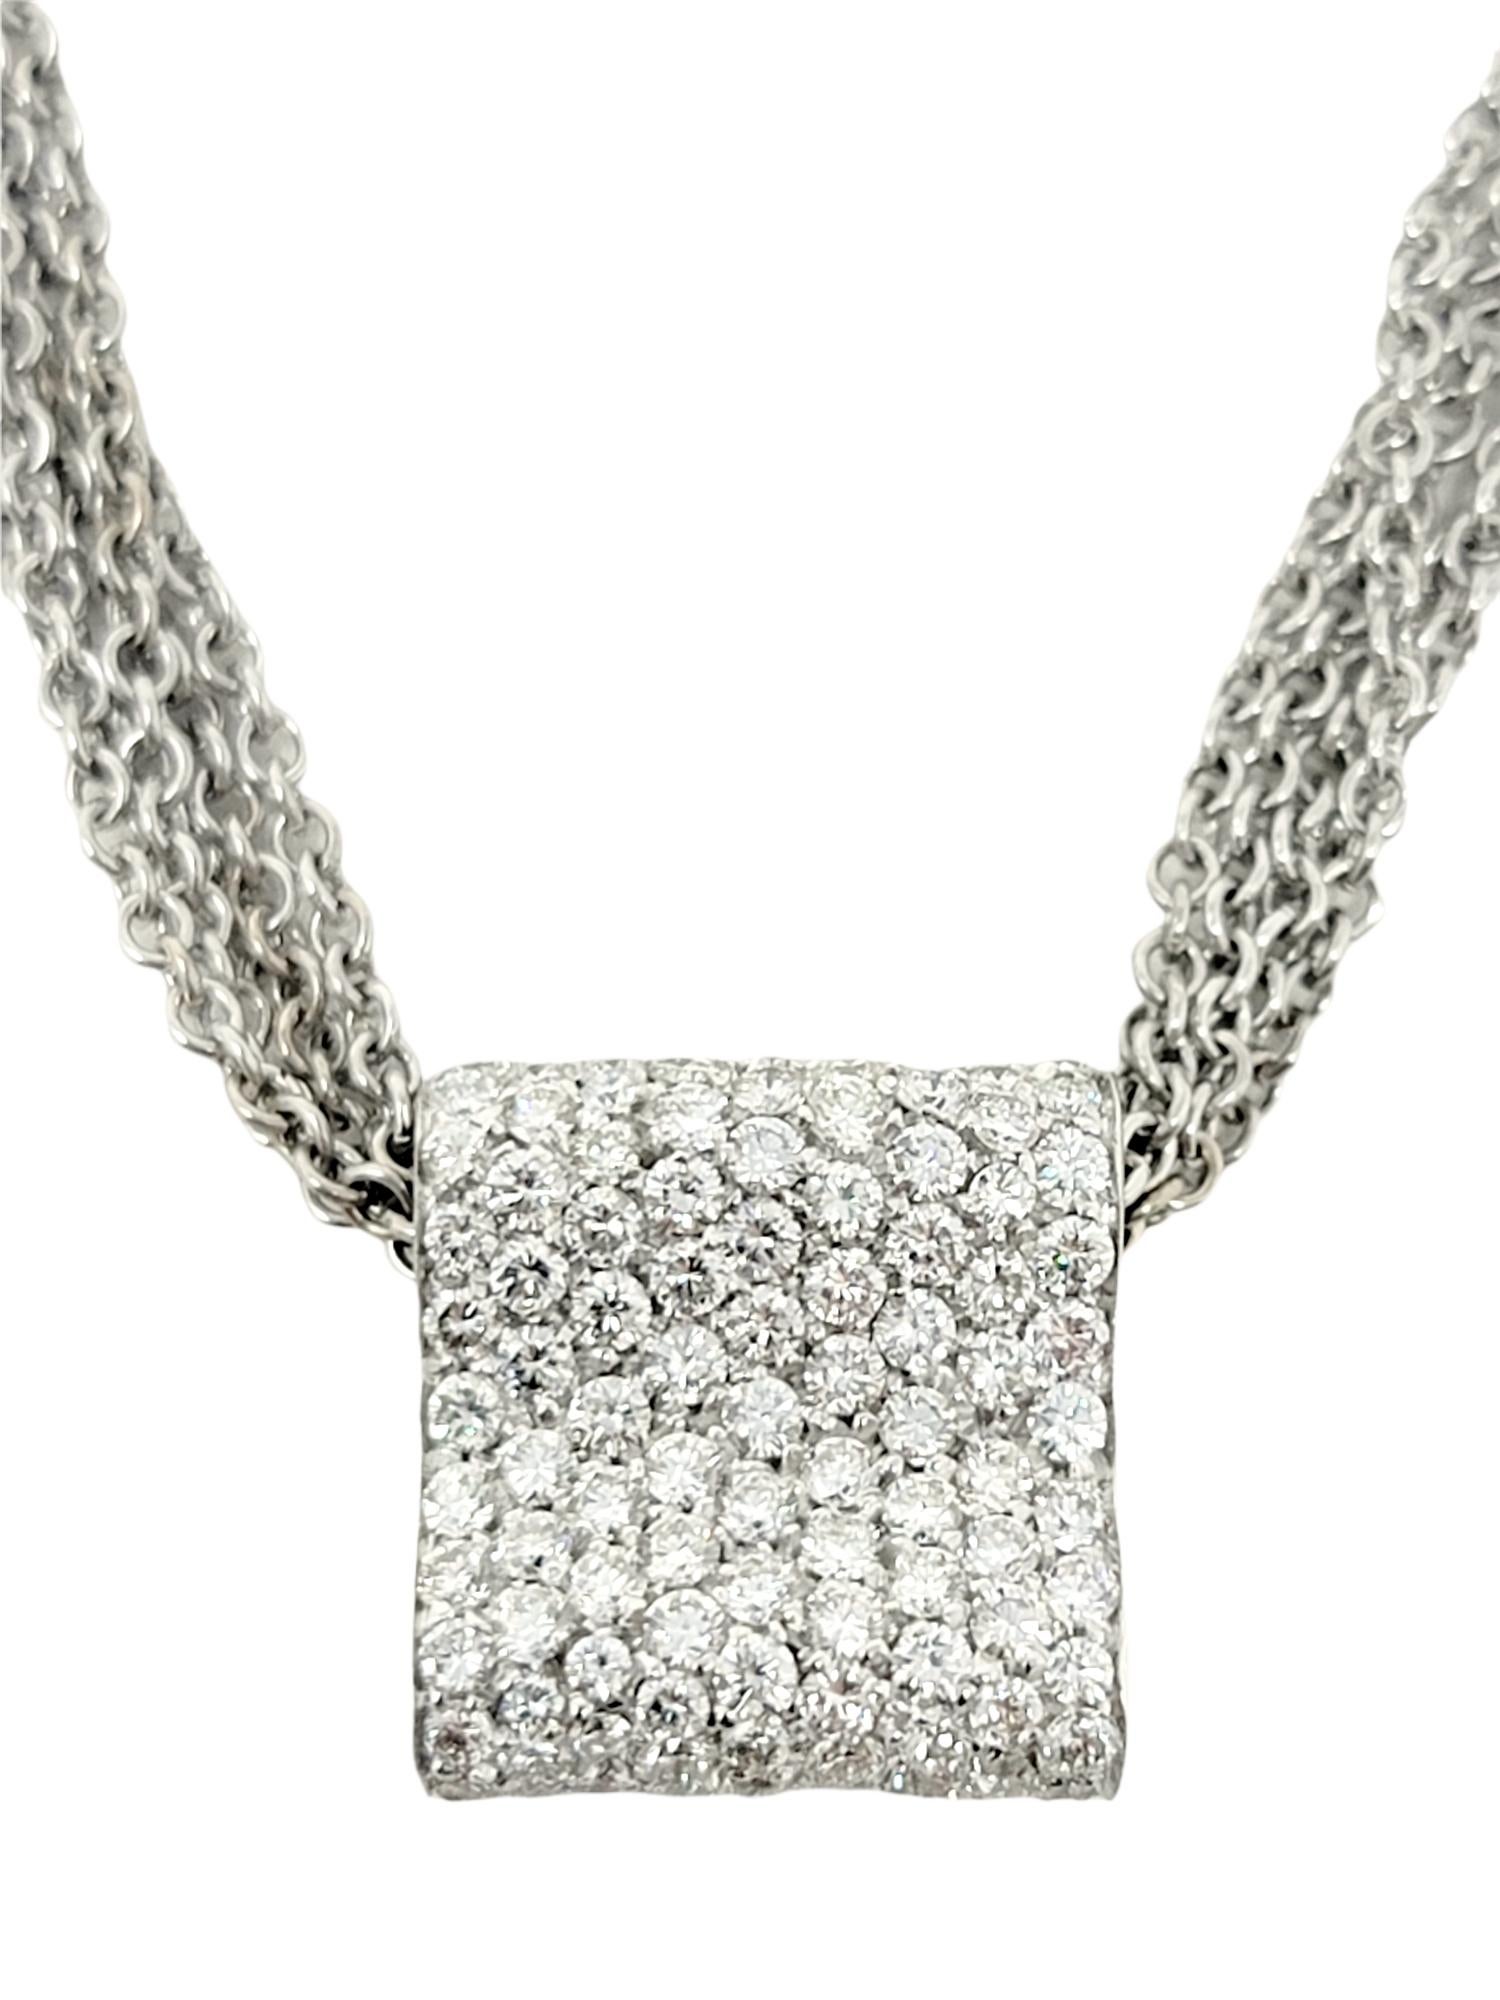 Contemporary Luca Carati Pave Diamond 5 Strand Chain Pendant Necklace in 18 White Karat Gold For Sale